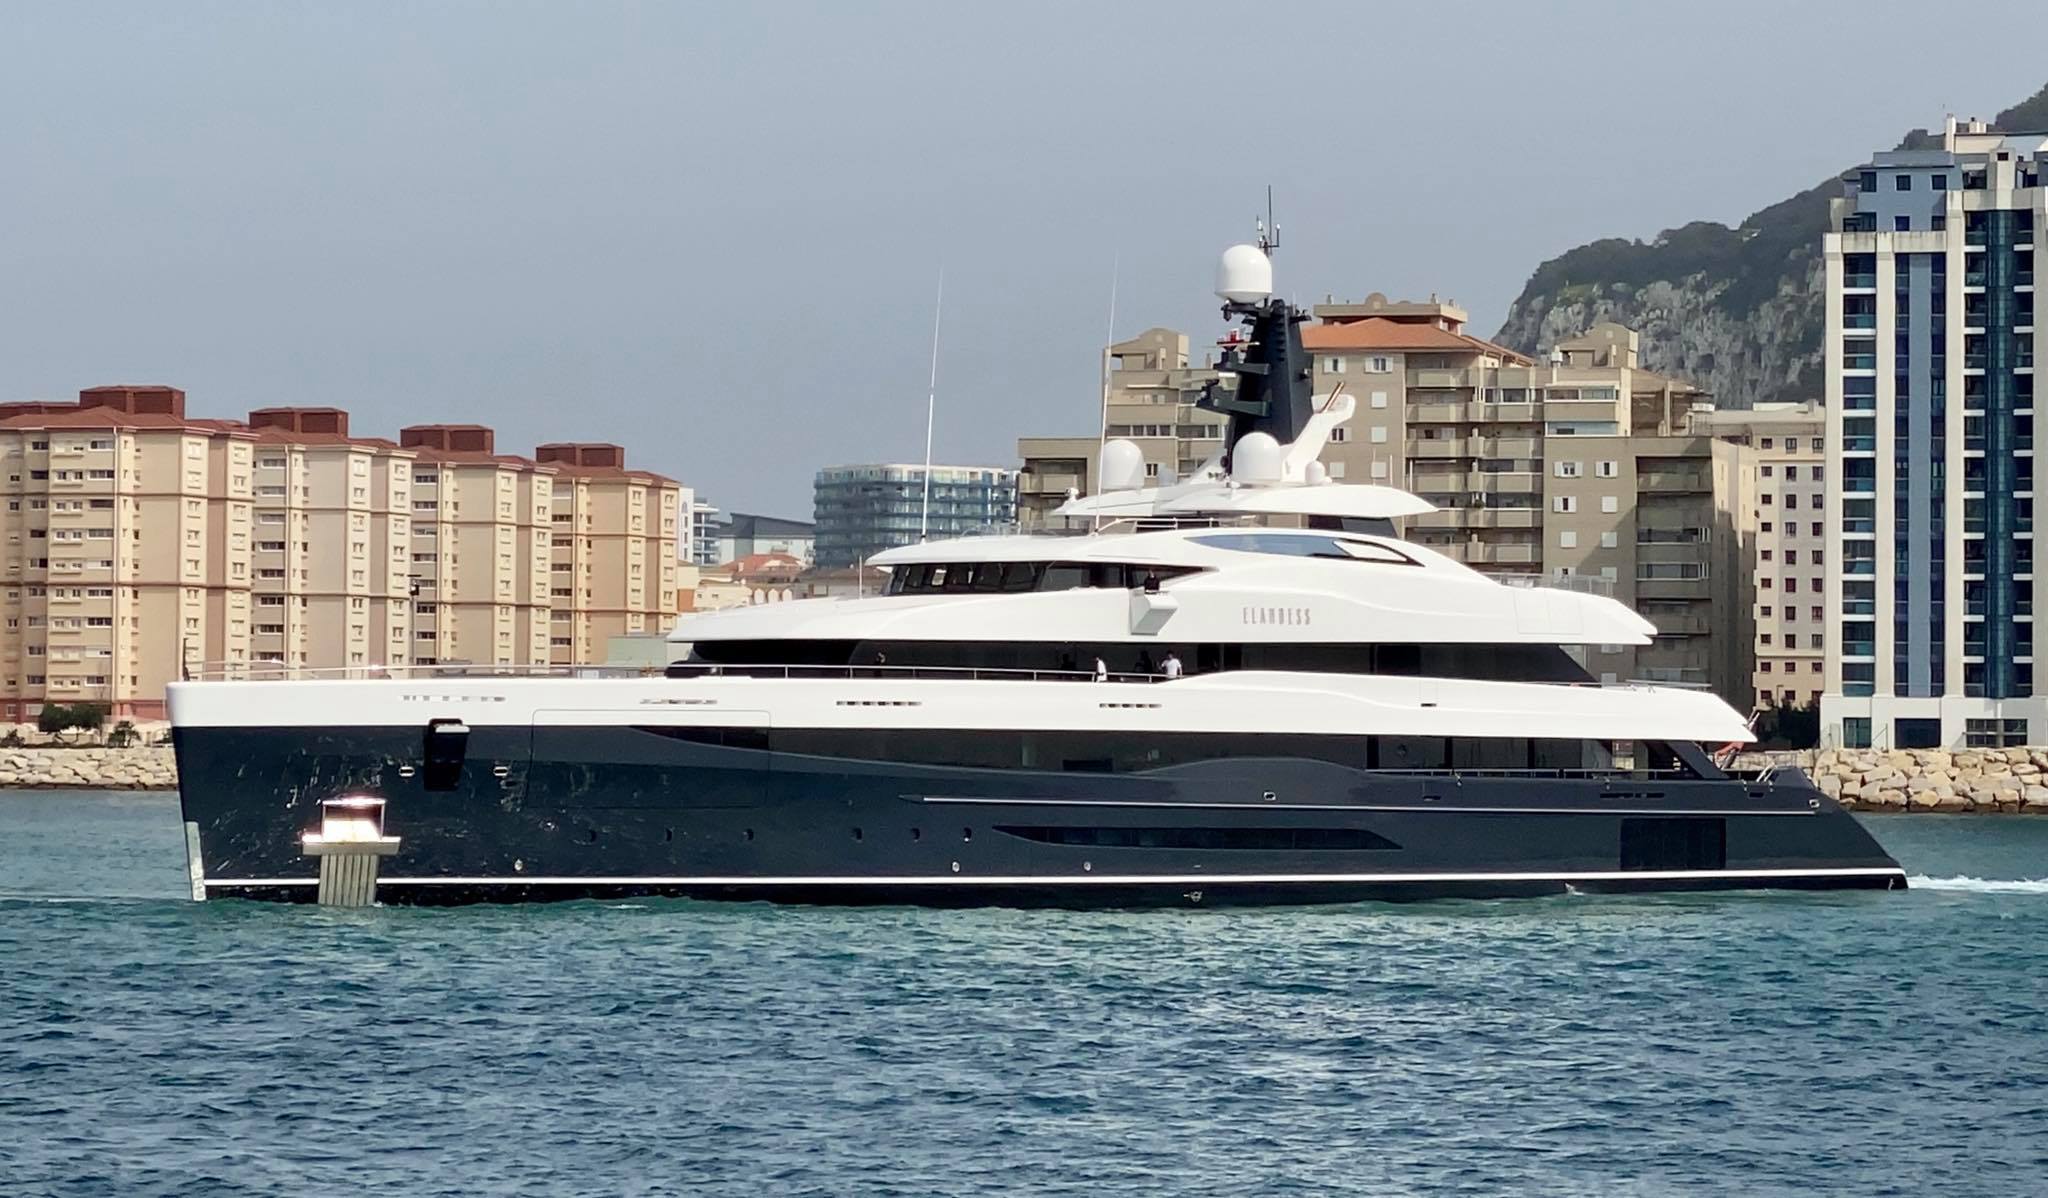 The yacht Elandess arrived in Gibraltar